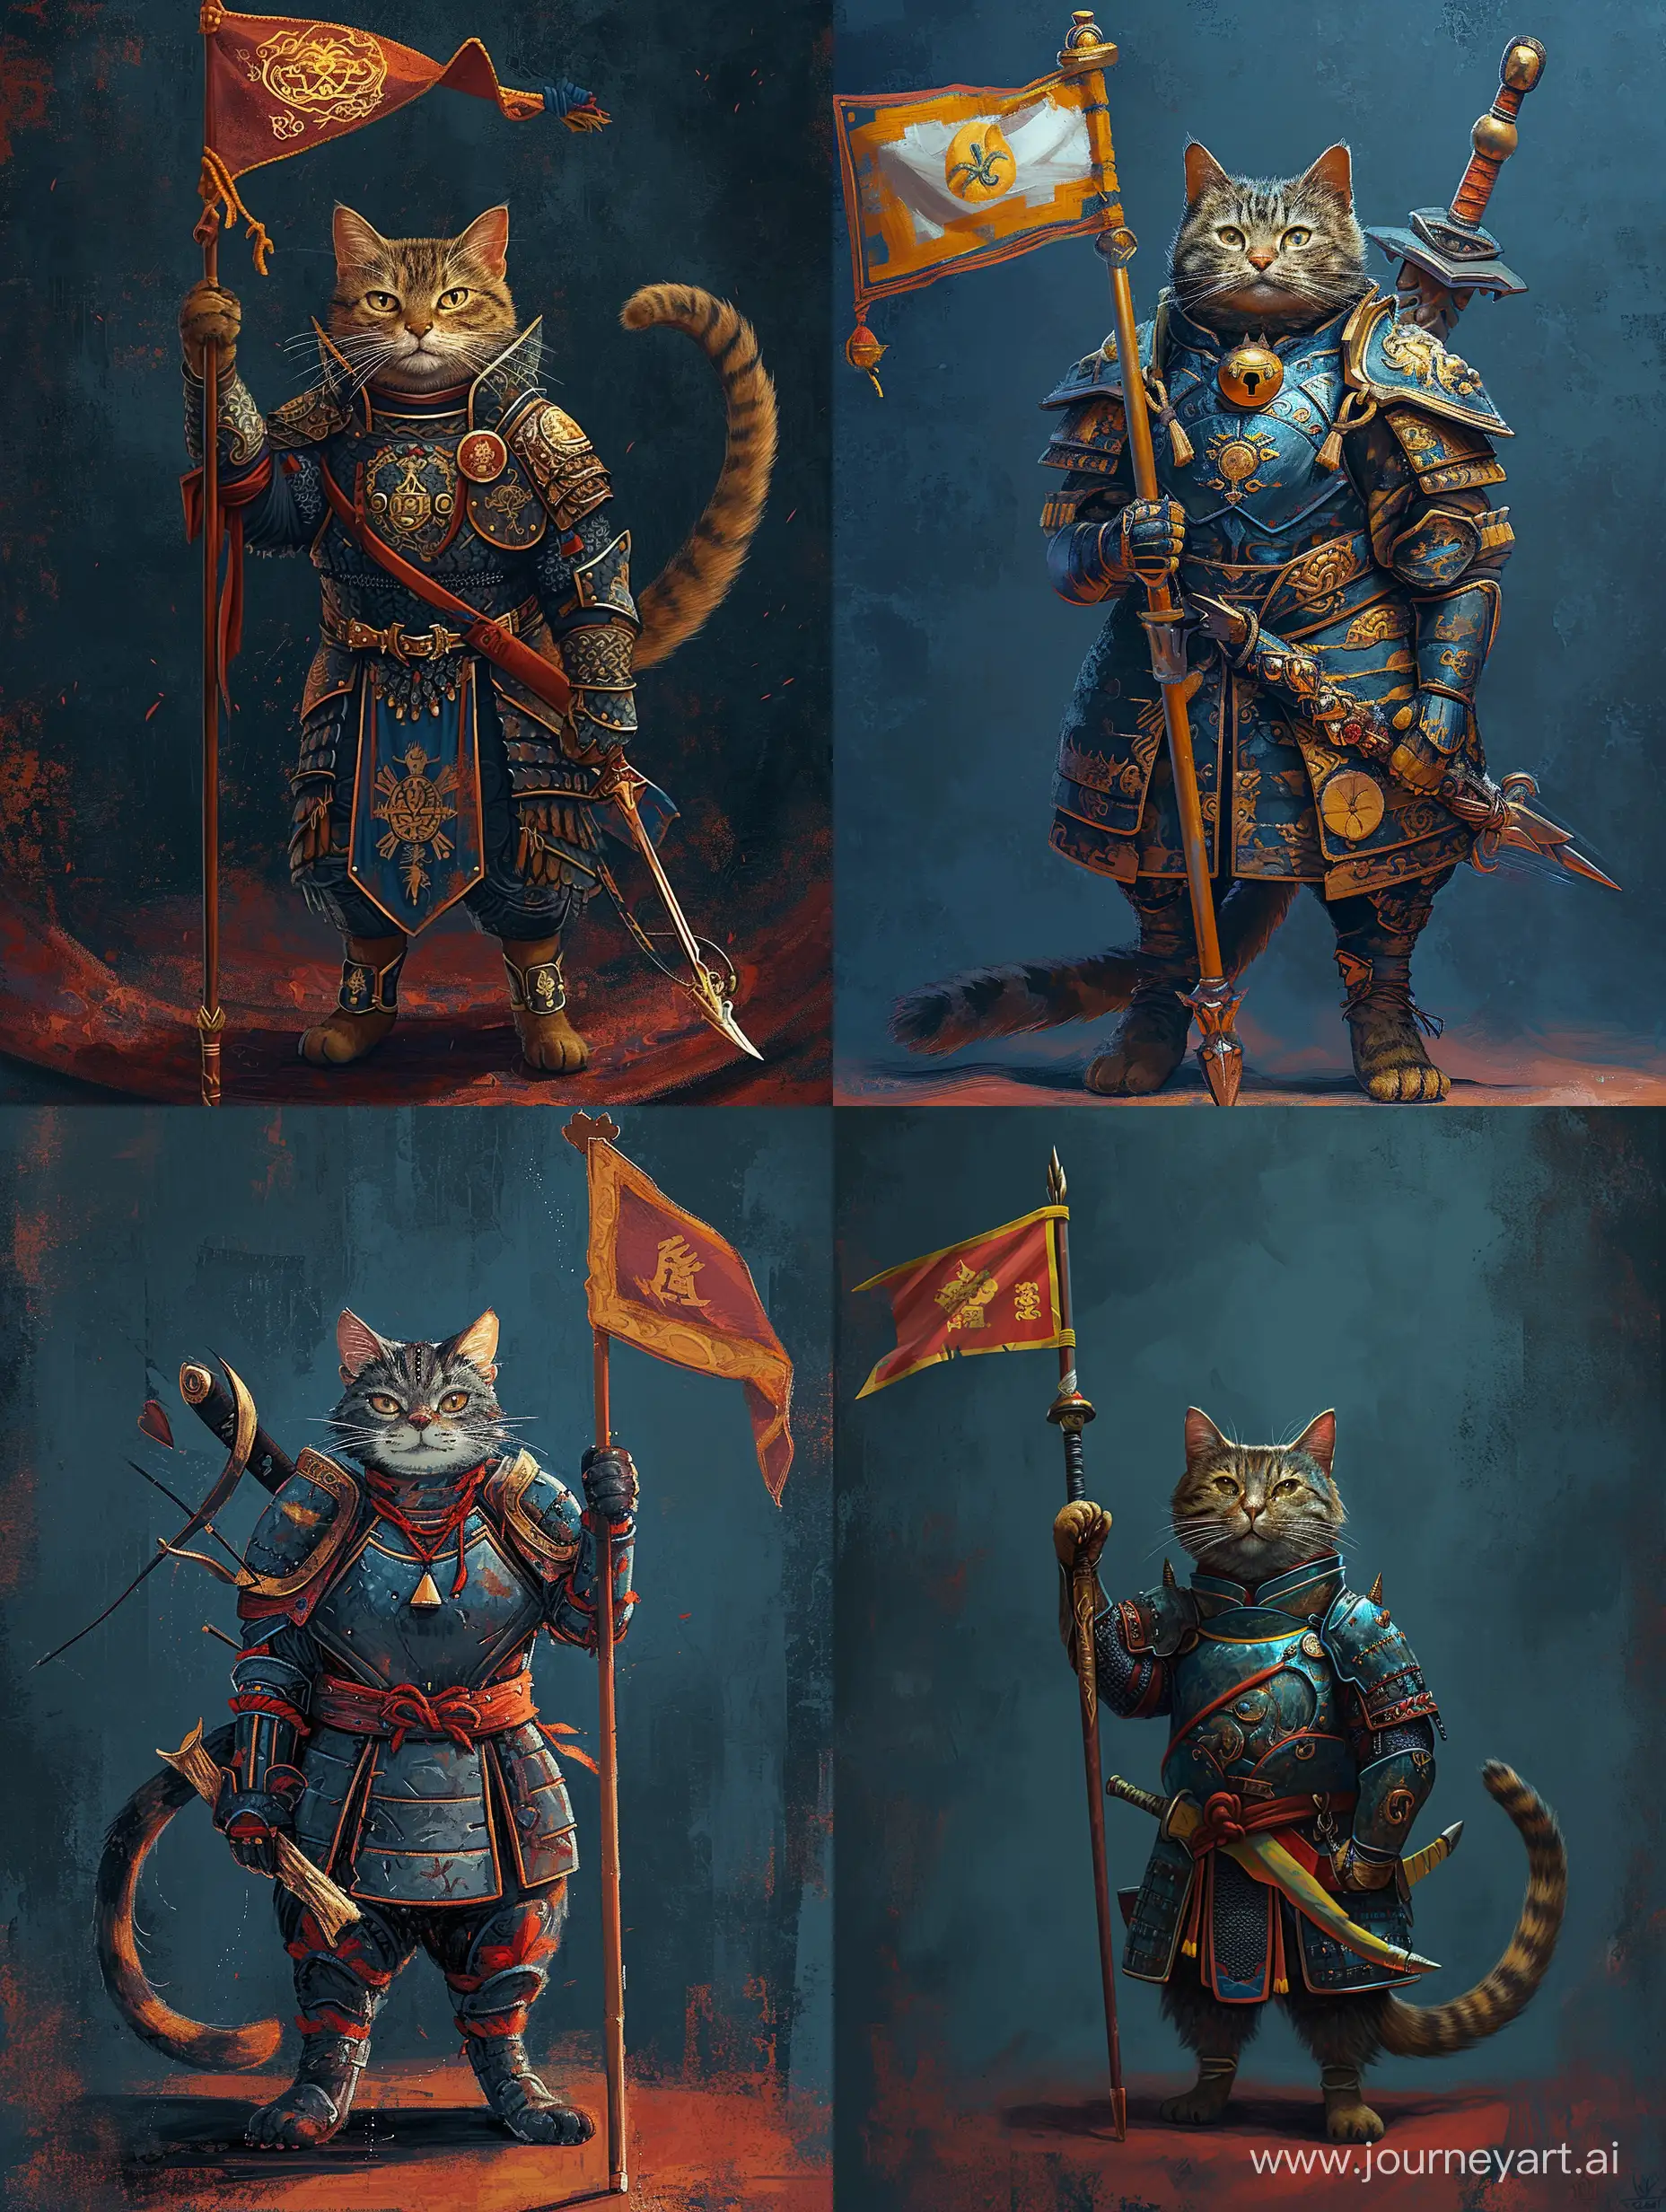 Cartoonish-Cat-Warrior-Holding-Flag-and-Sword-in-Orientalinspired-Armor